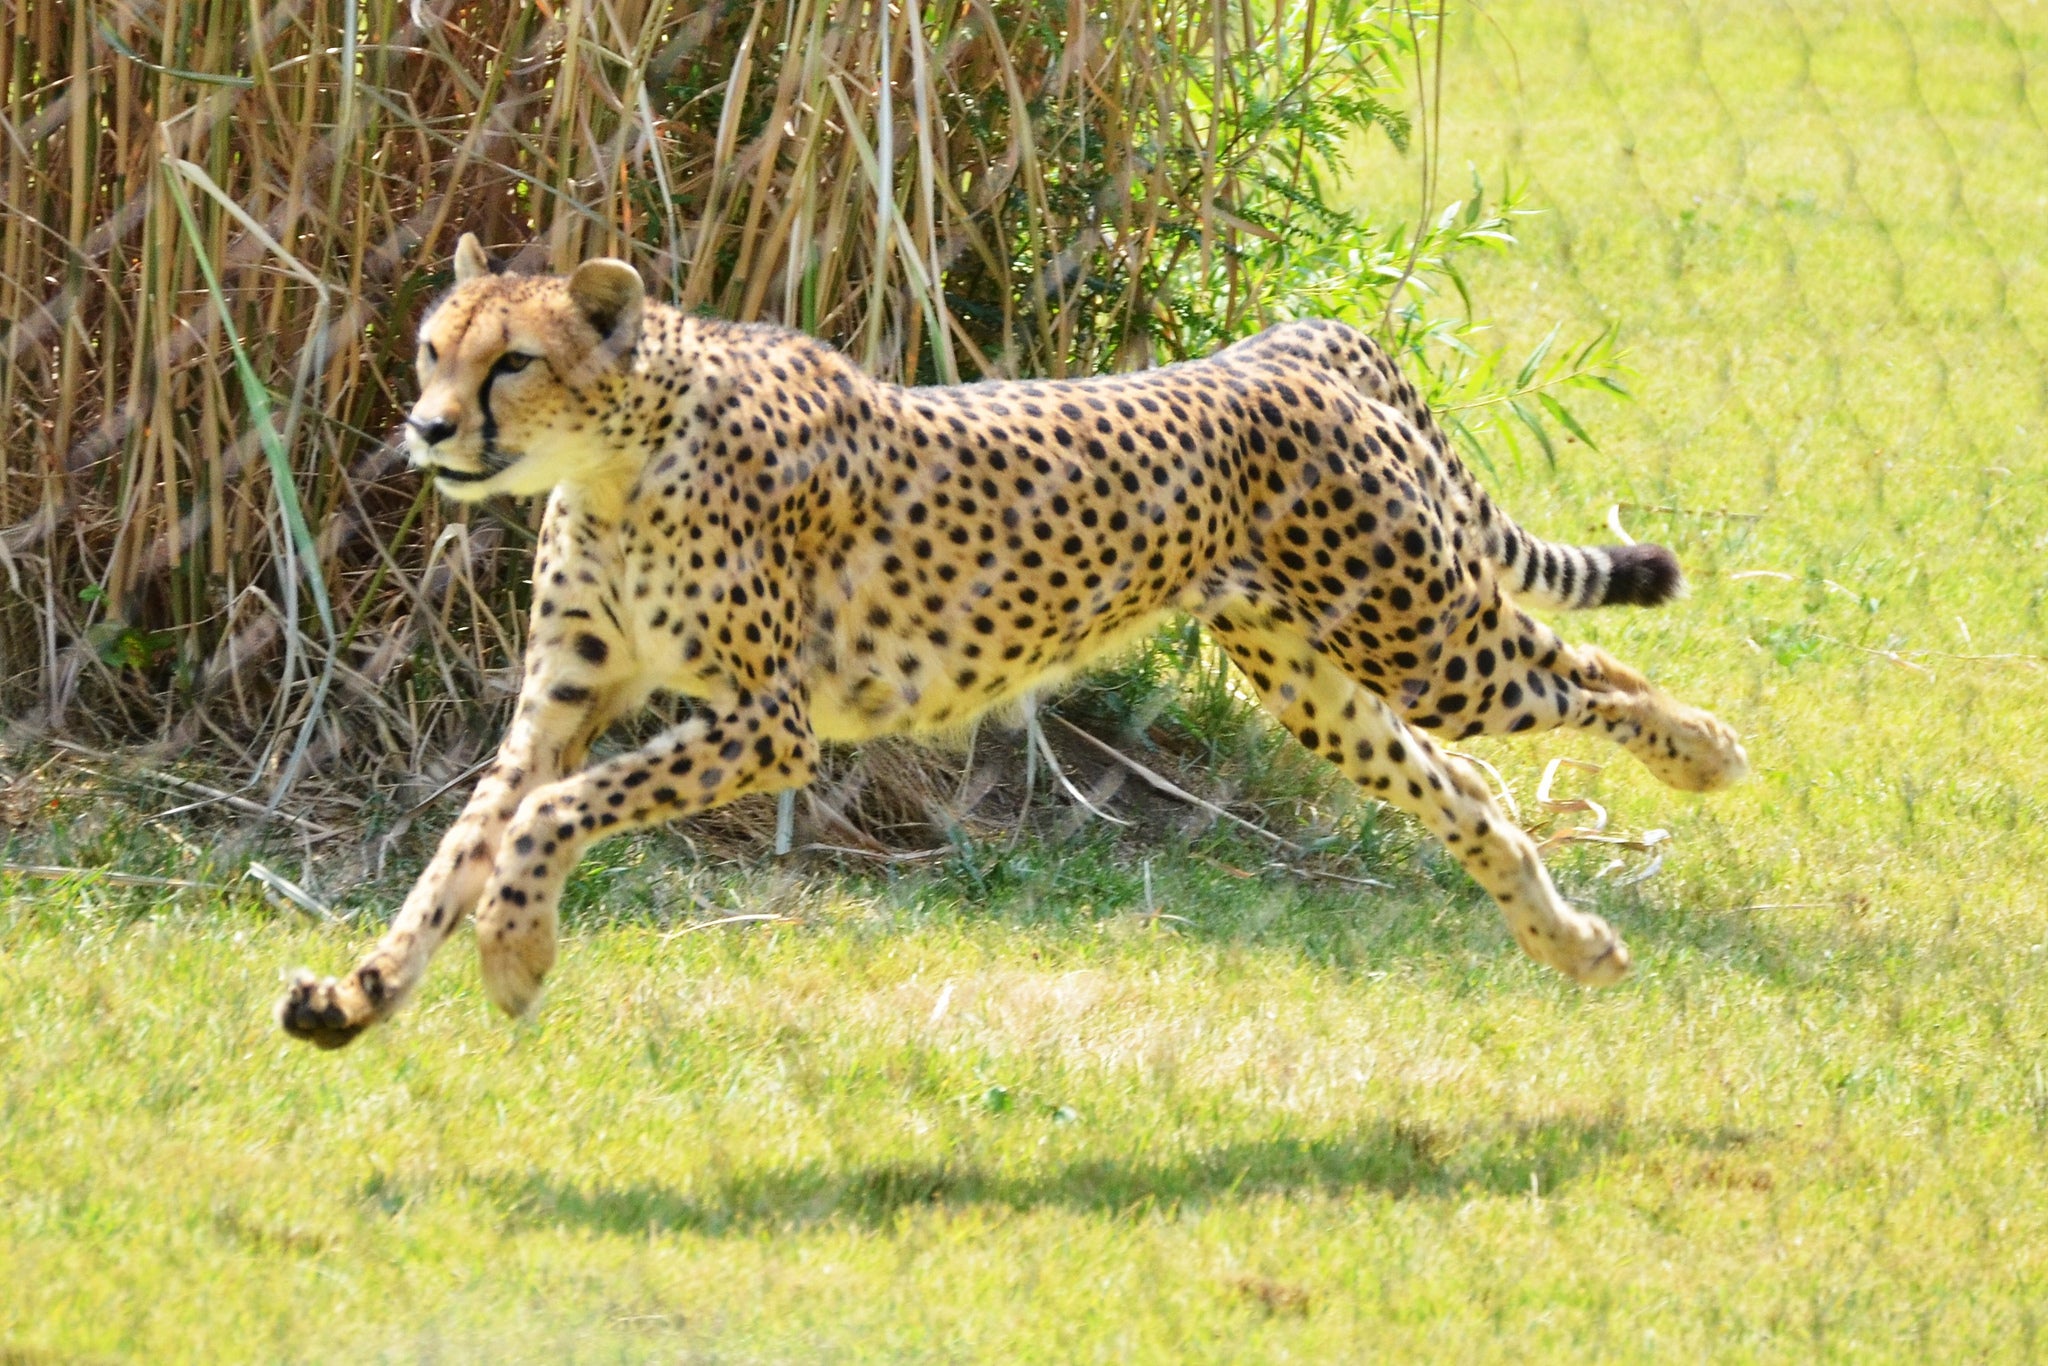 Sarah The Cheetah, World's Fastest Land Animal, Has Died | Popular Science